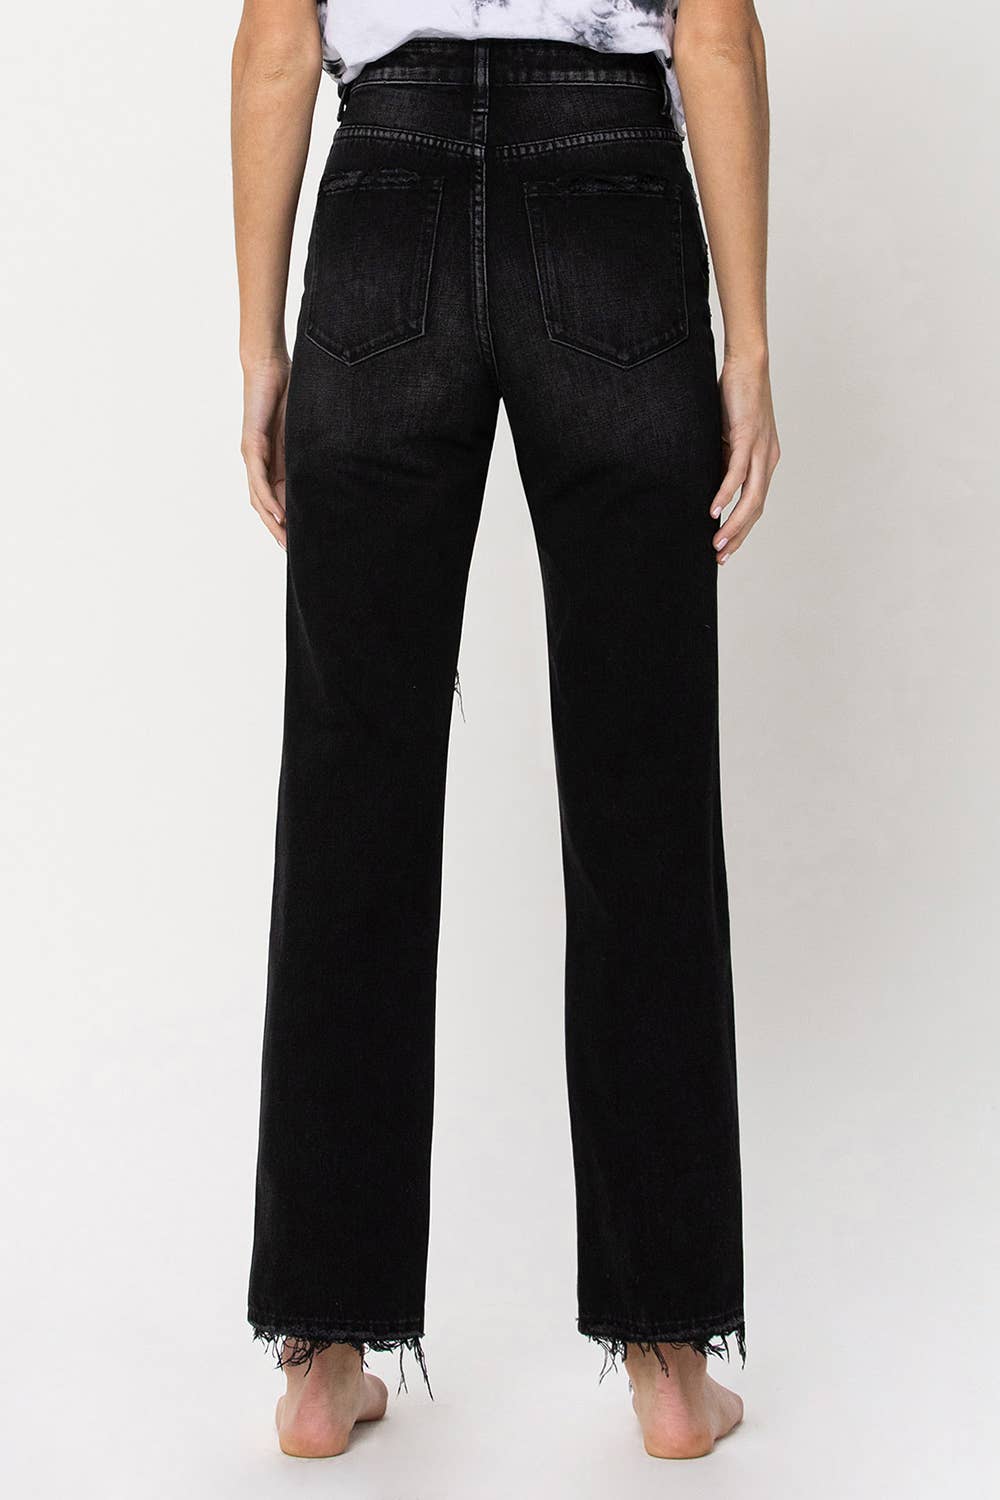 Vervet Distressed 90’s Vintage Straight Jean - Denim